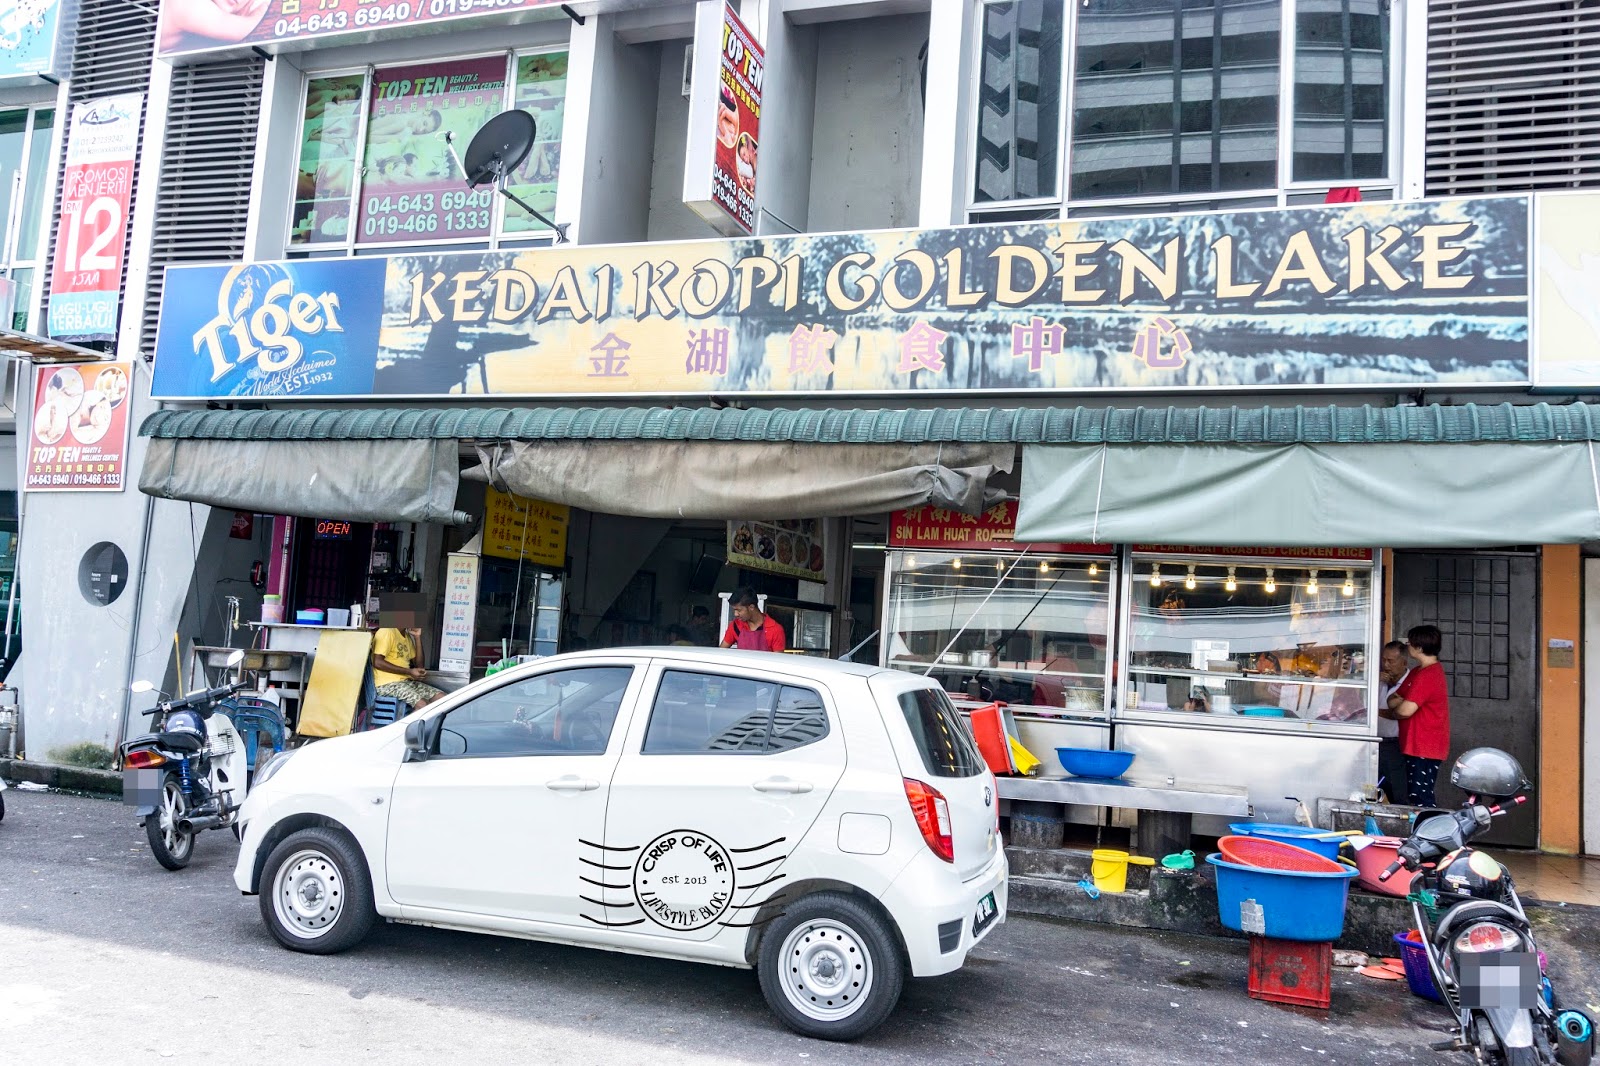 Relau Sin Lam Huat Roasted Chicken Rice @ Golden Lake Coffee Shop, Penang